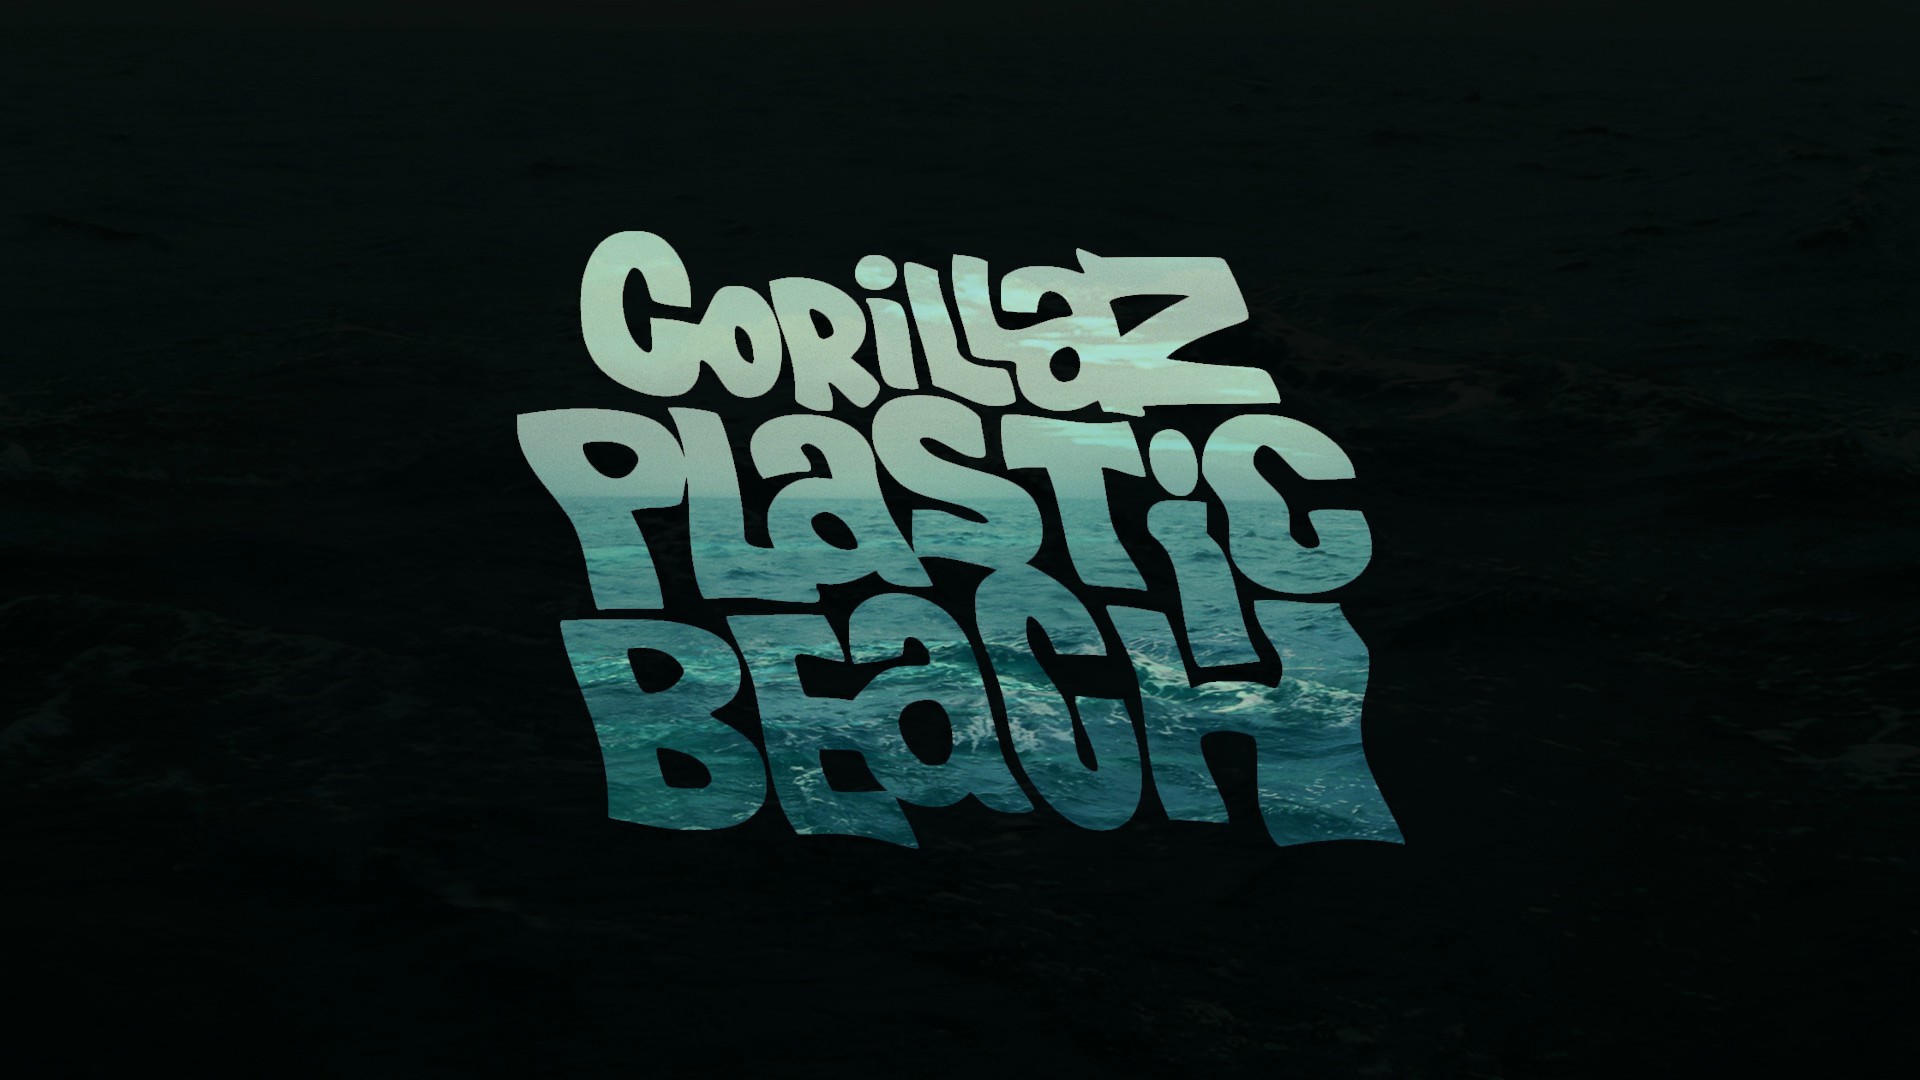 1920x1080 Gorillaz Plastic Beach Cover wallpaper